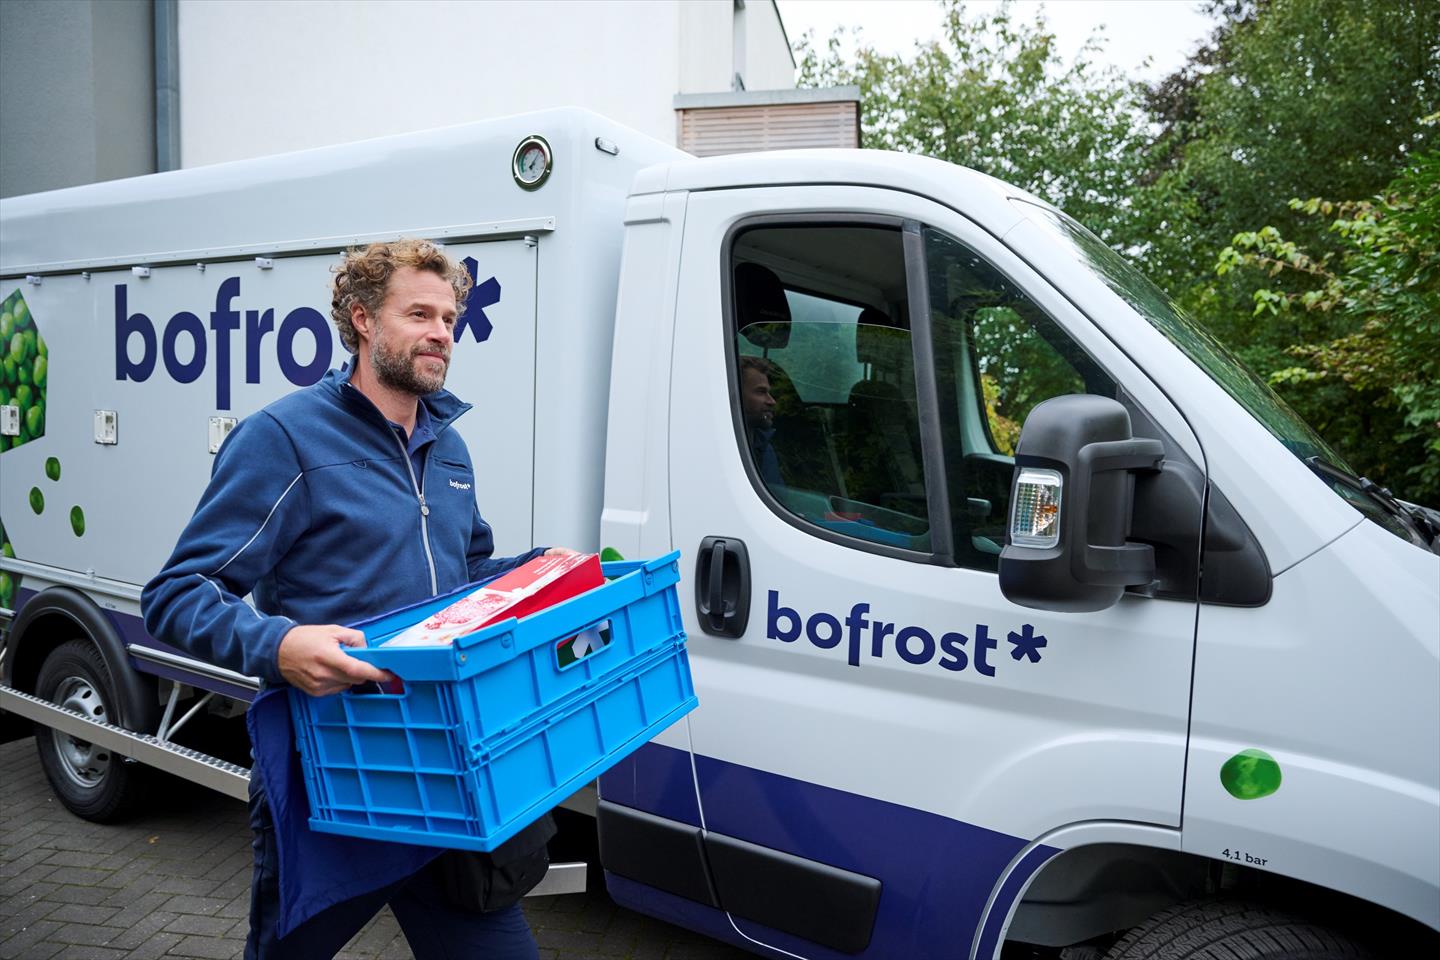 Bofrost*France emploi